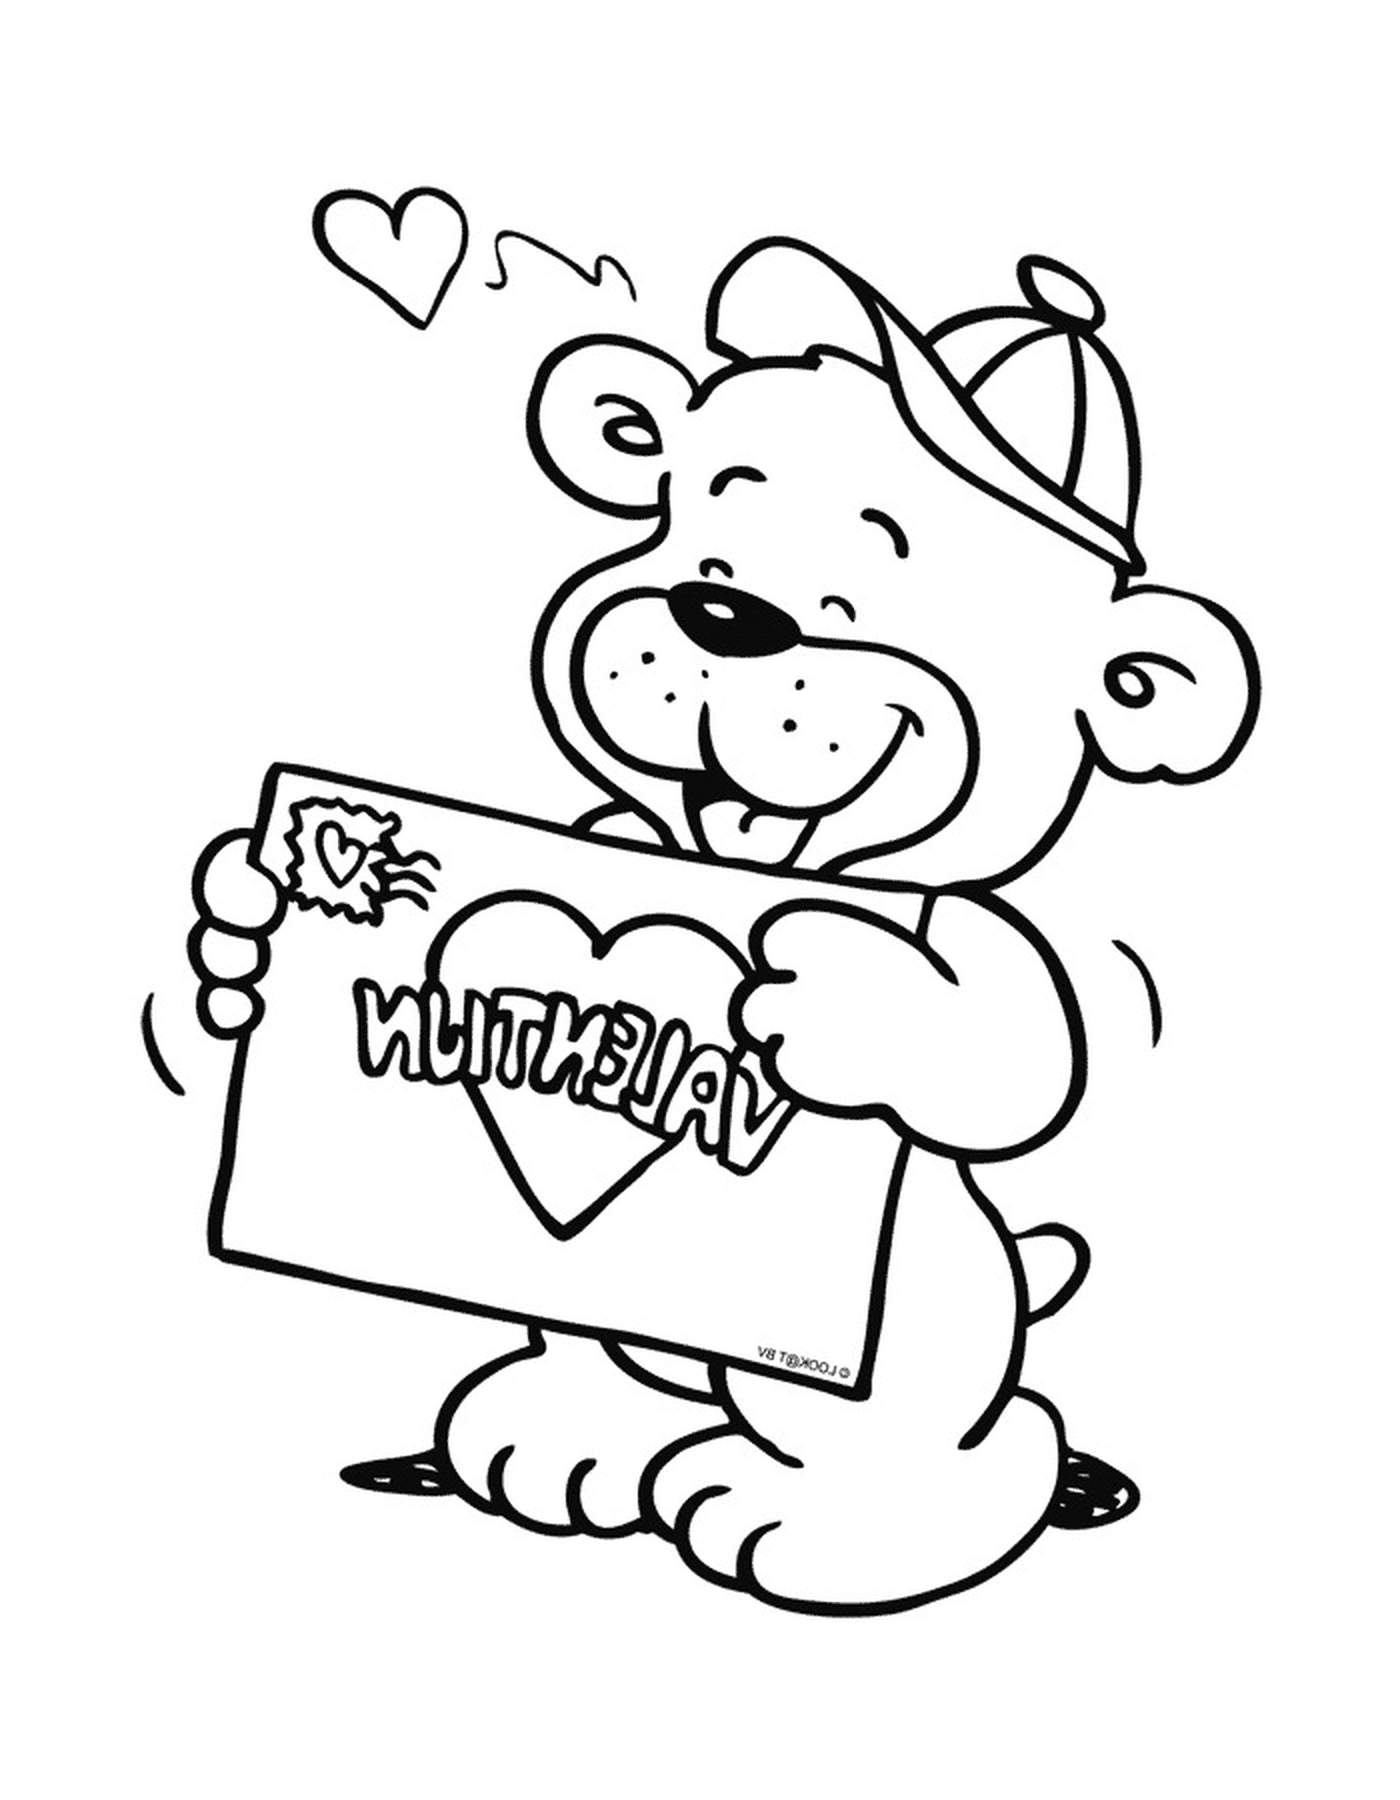  A teddy bear holding a Valentine's Day card 